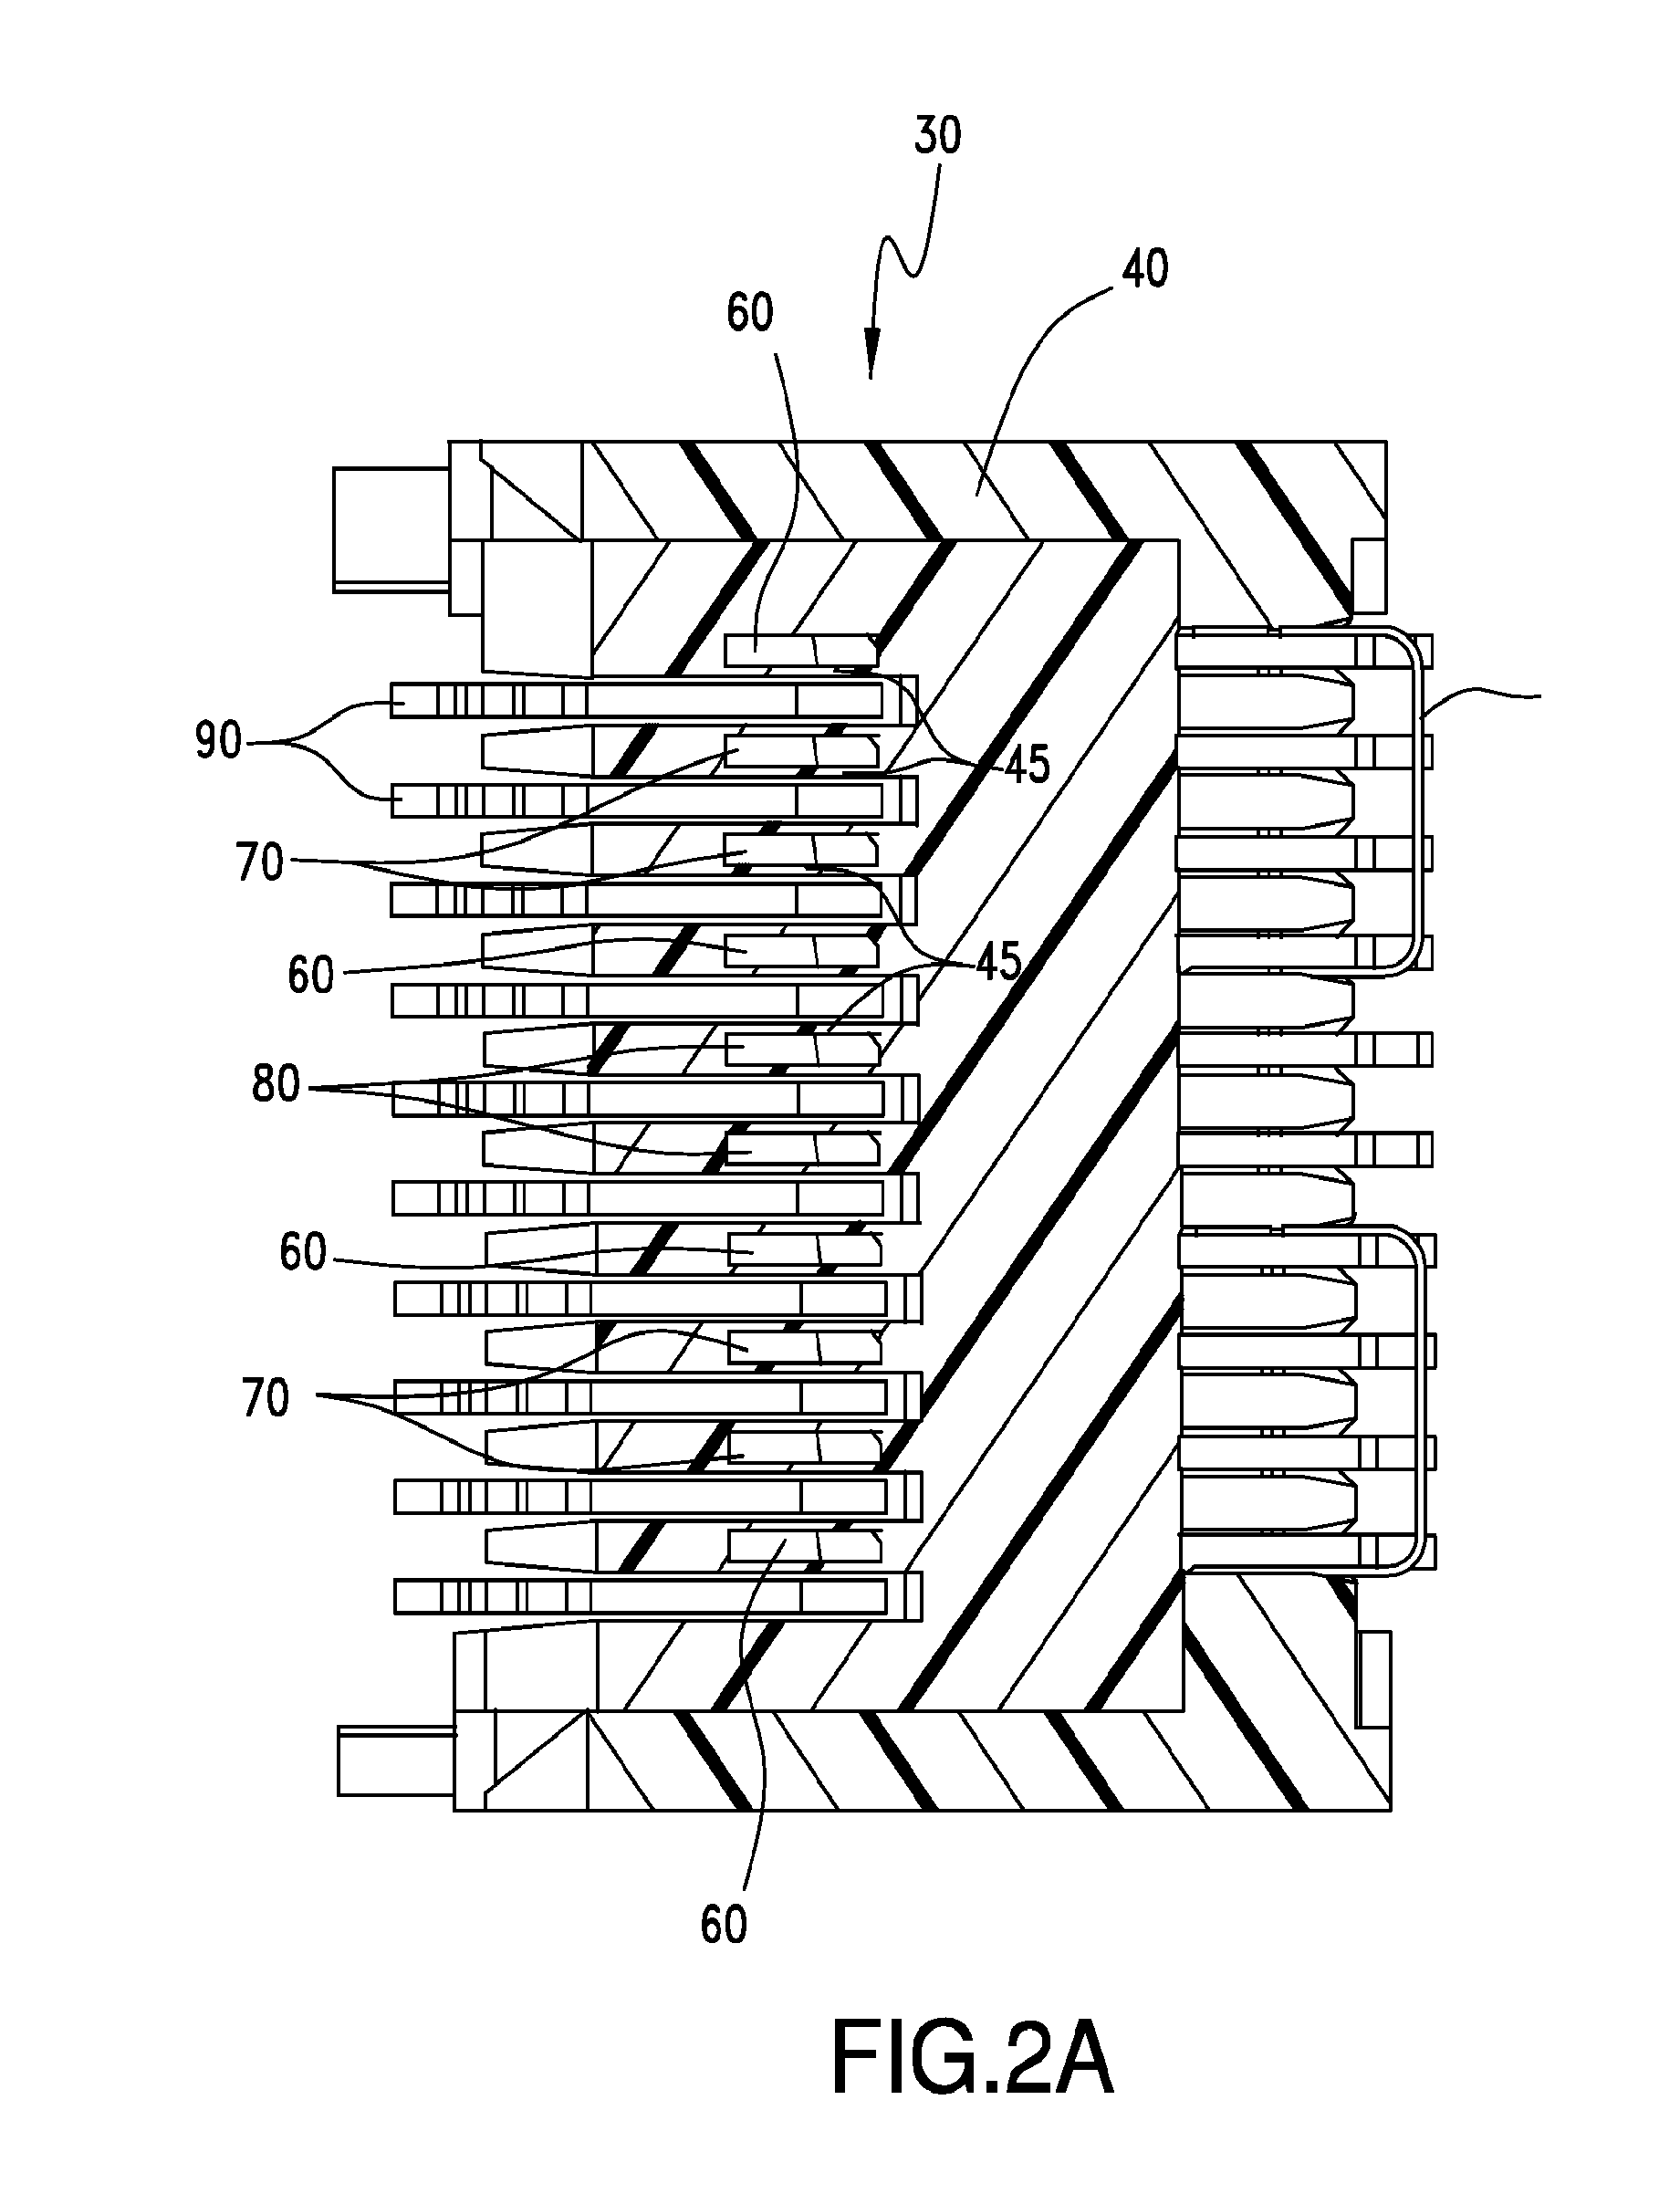 Resonance modifying connector